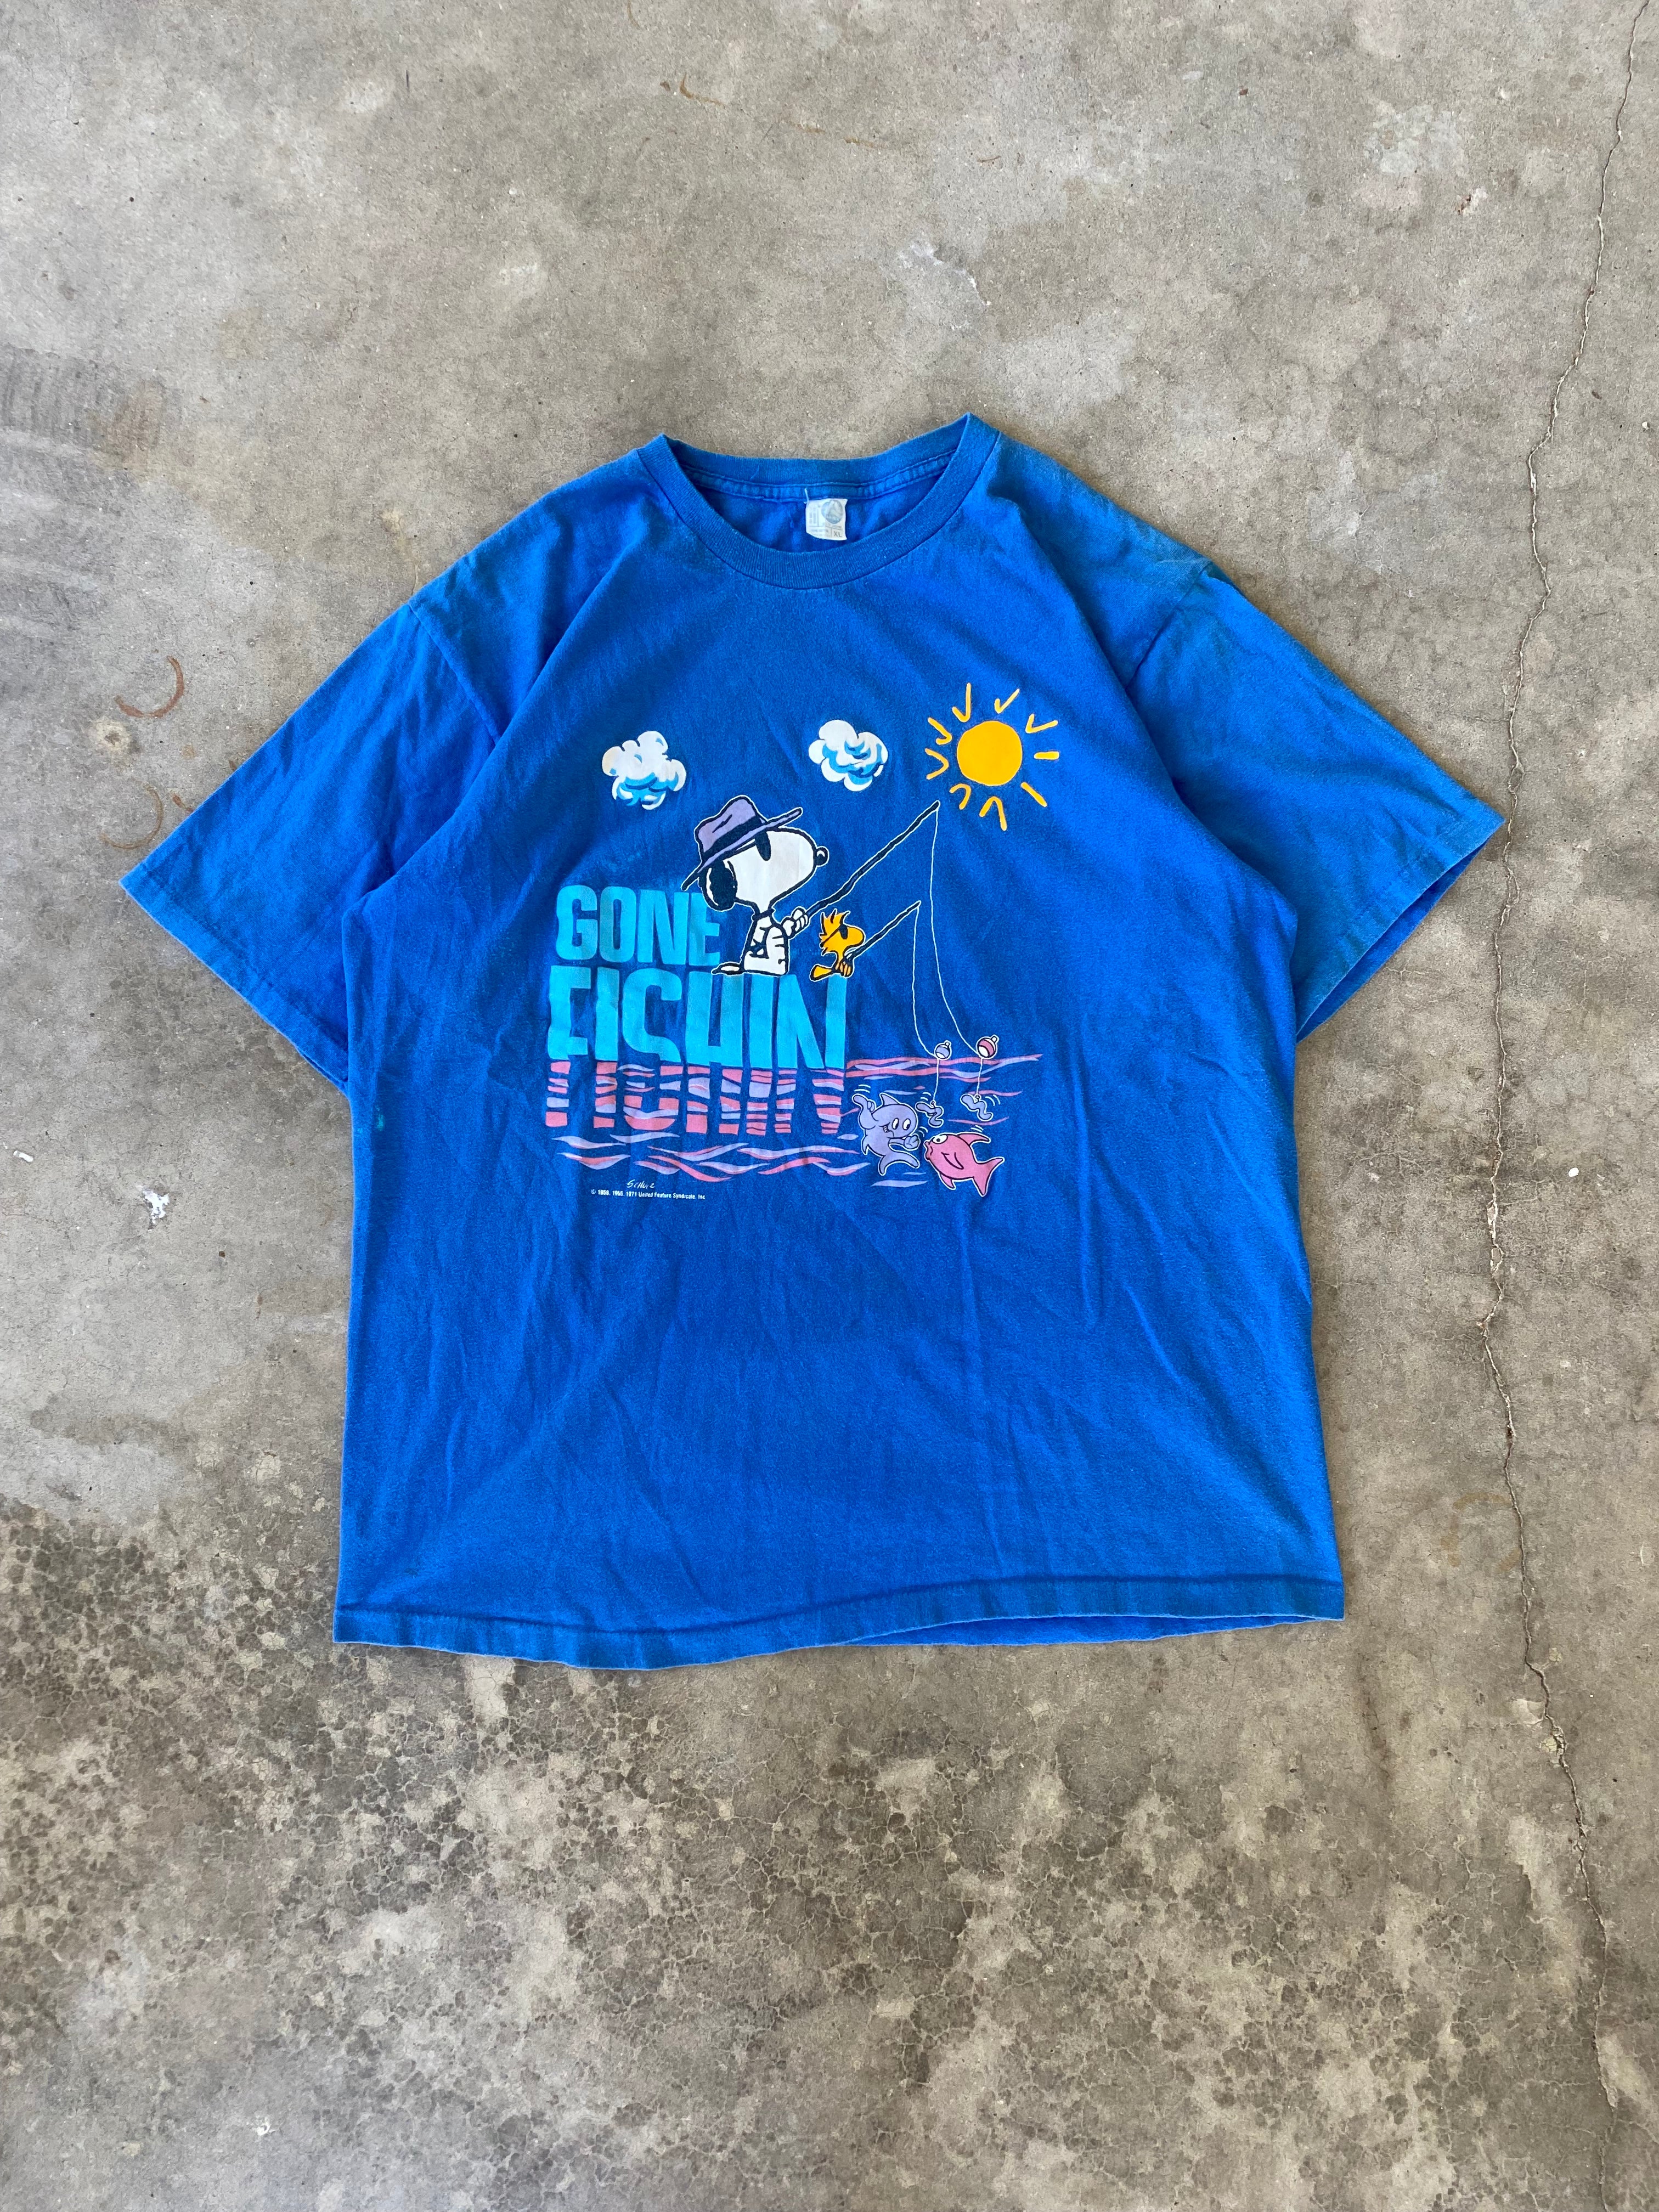 1980s Snoopy "Gone Fishing" T-Shirt (XL)